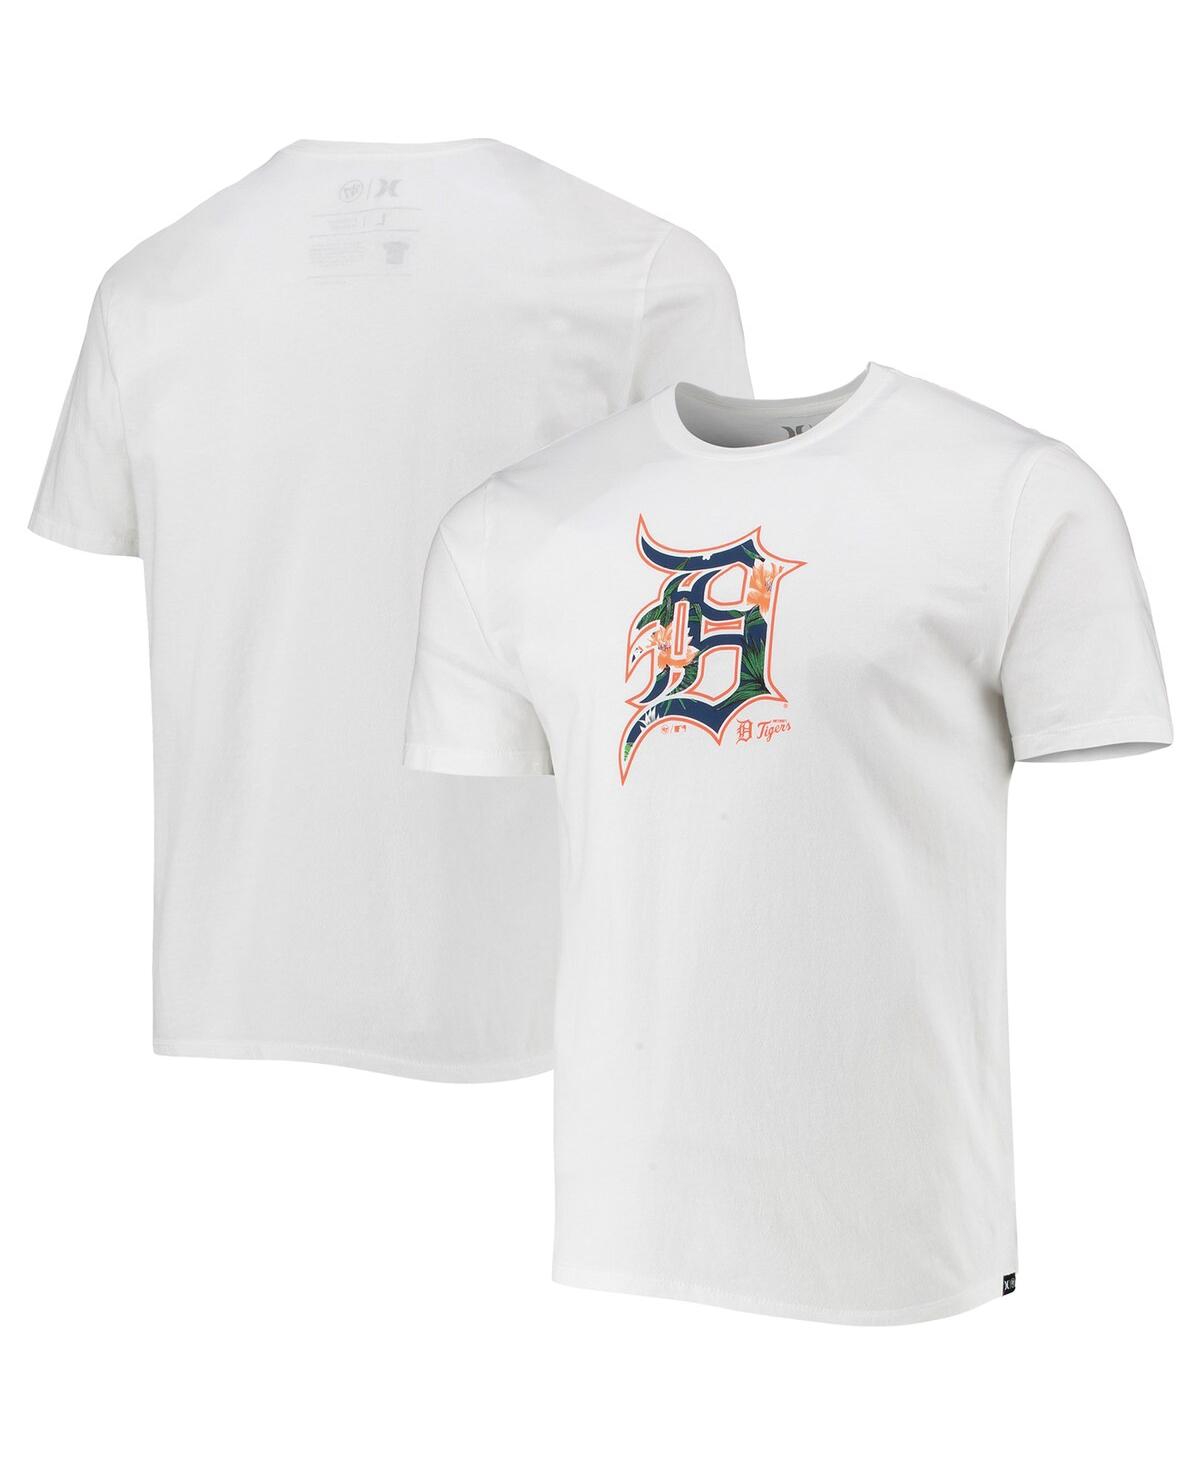 Men's Hurley x '47 Brand White Detroit Tigers Everyday T-shirt - White